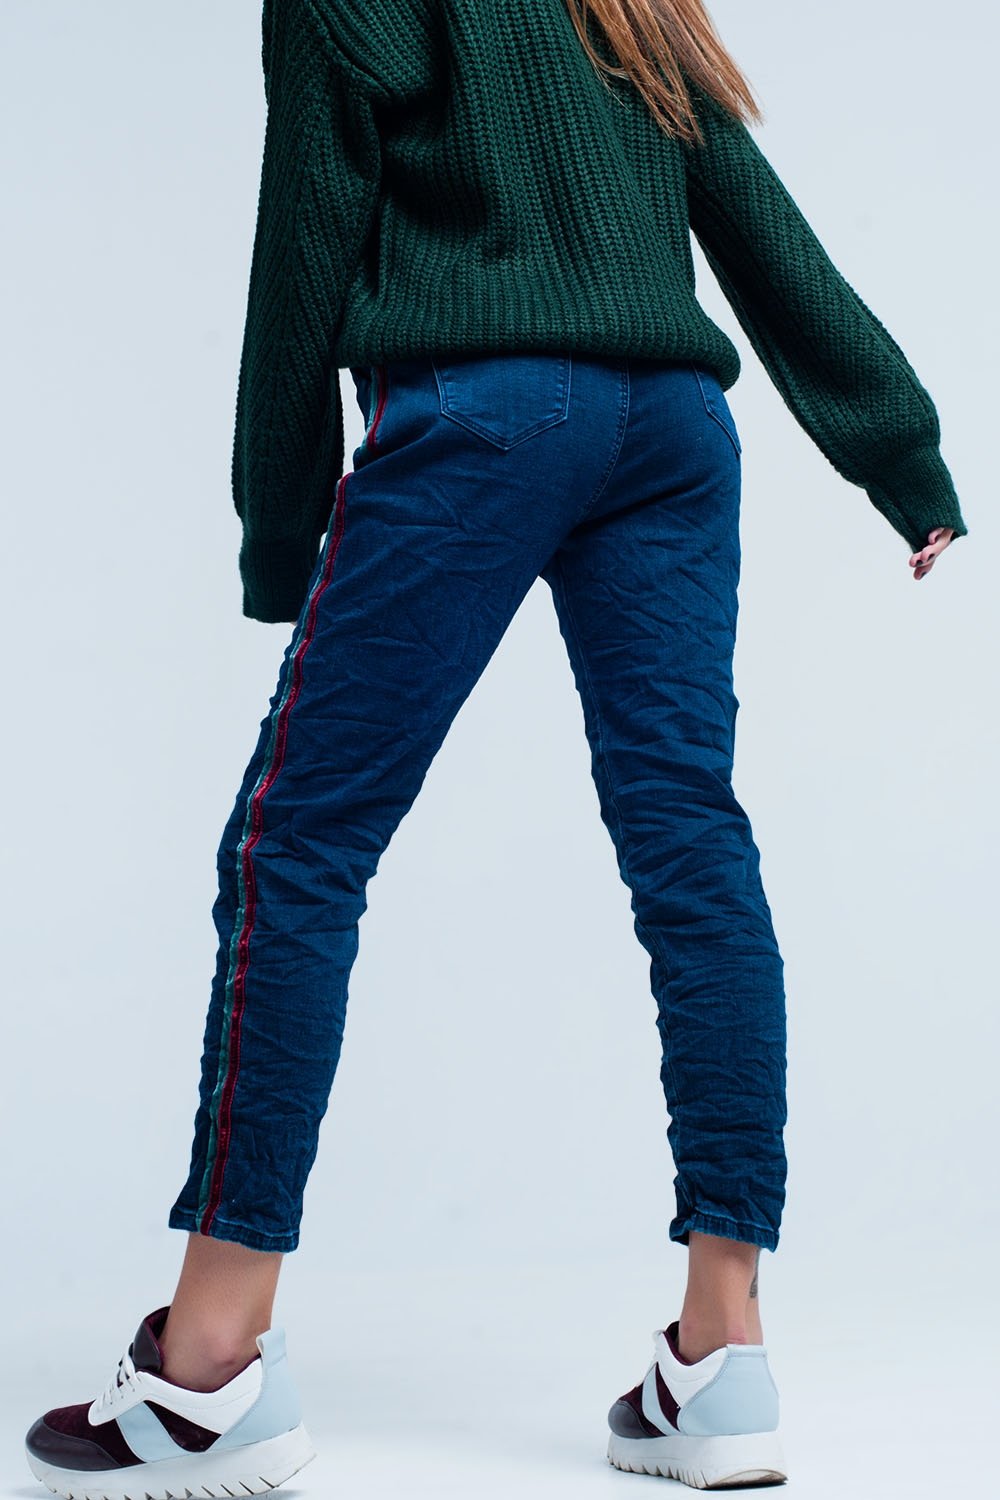 Blue Baggy Jeans Multi-Color Side Stripe